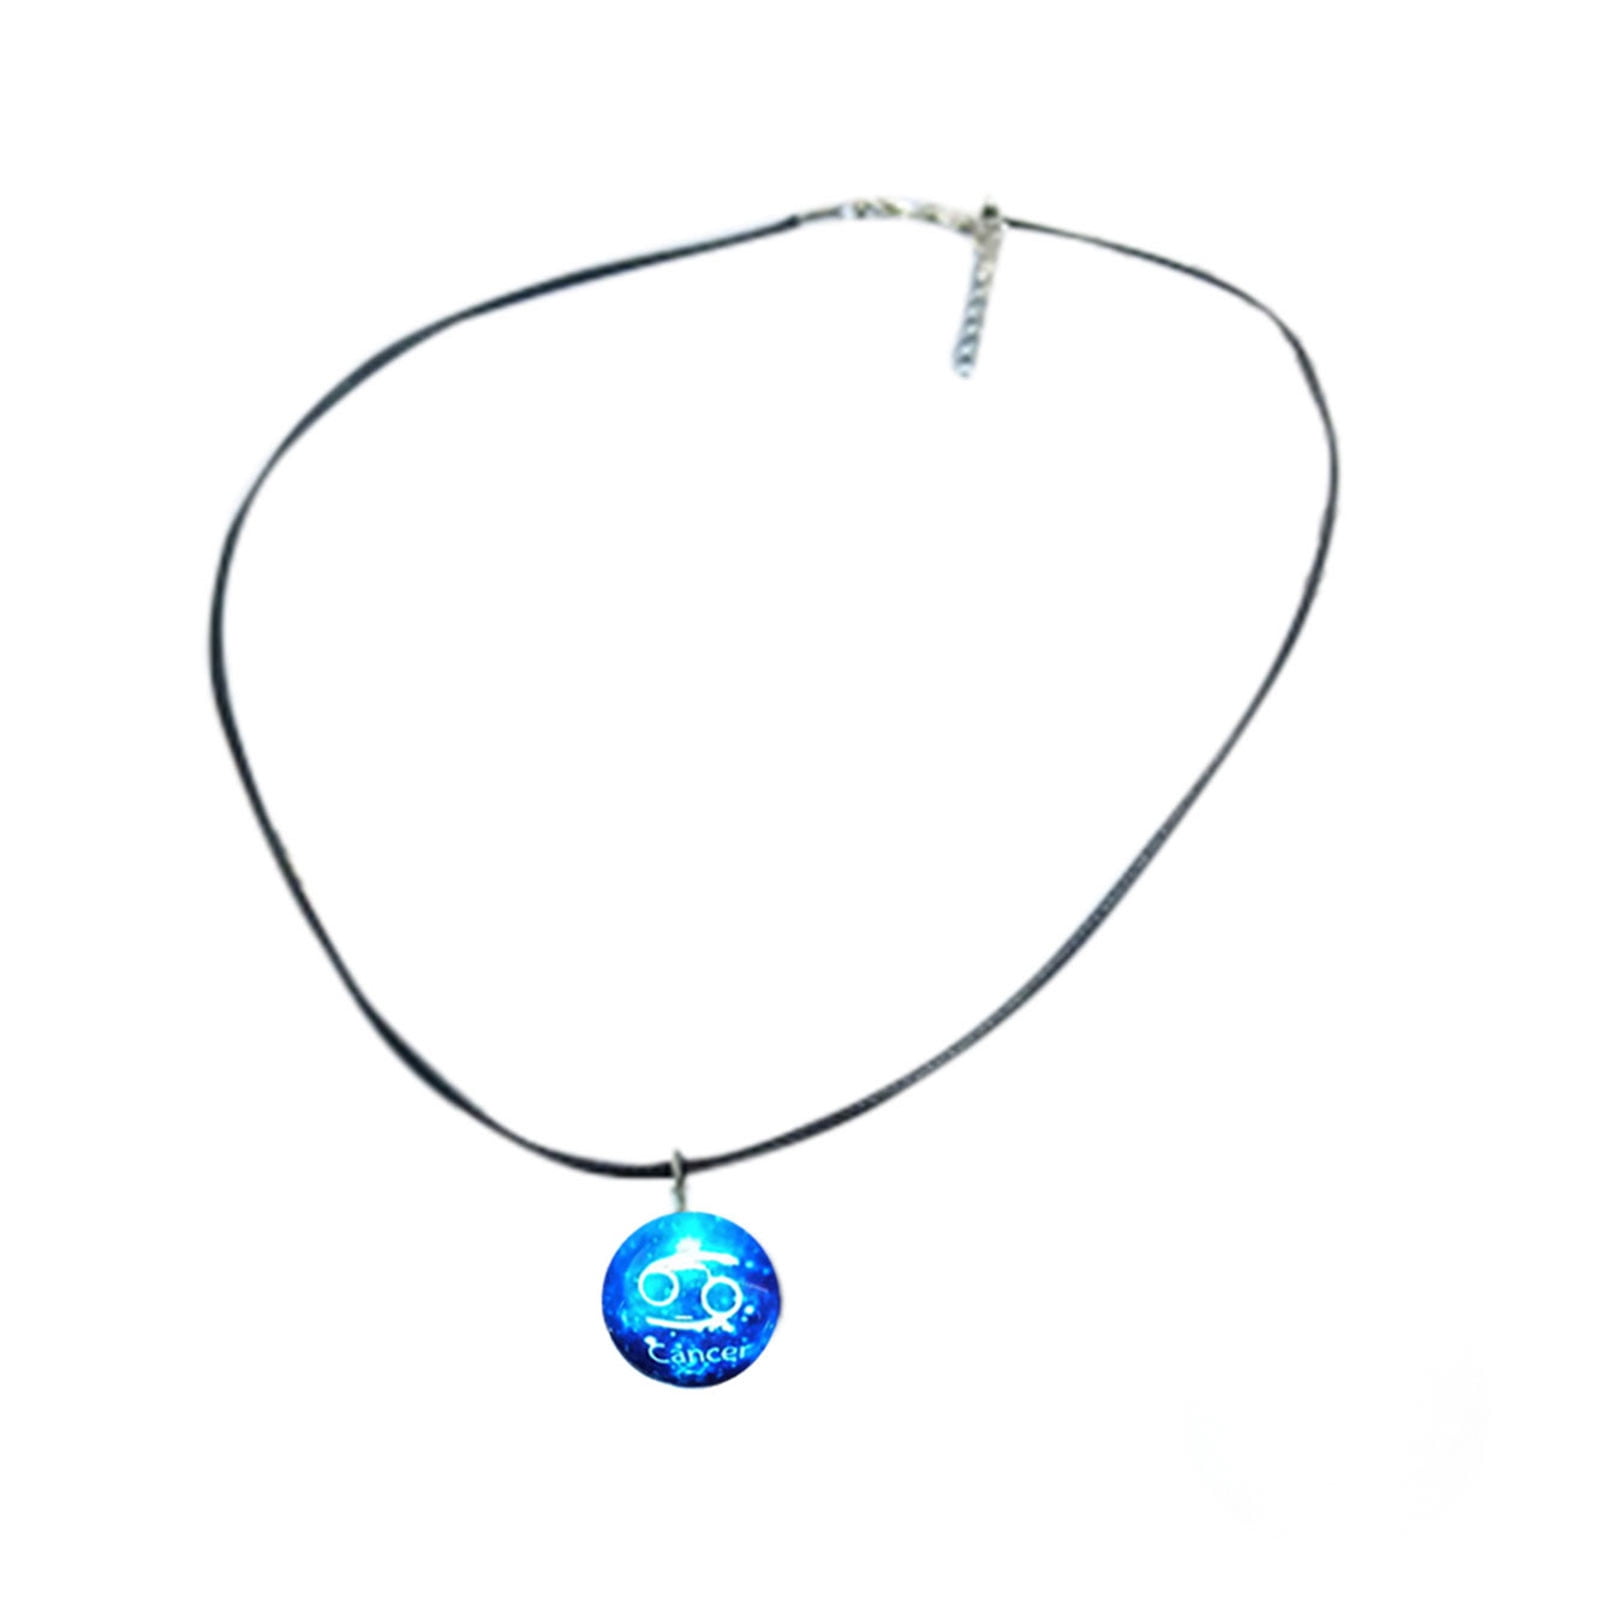 12 Zodiac Constellation Pendant Chain Necklace GIFT Xmas Jewelry Luminous 